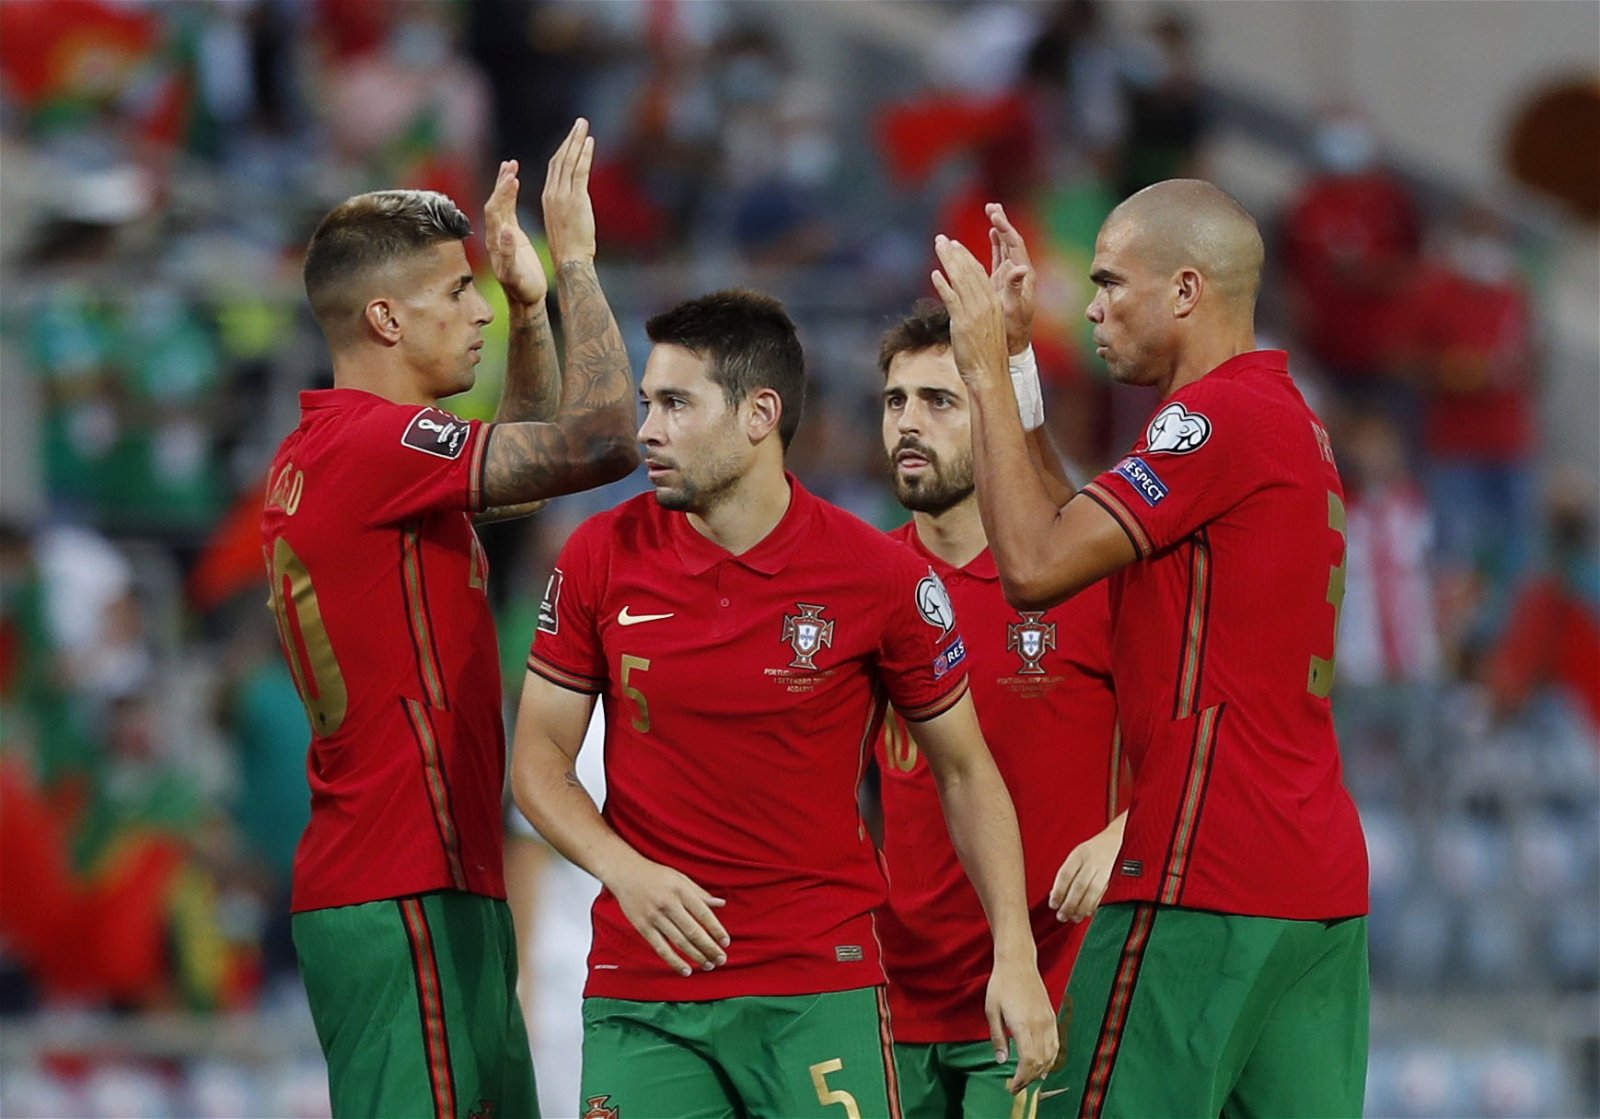 Ireland vs Portugal Live Stream Free, Predictions, Preview & Odds